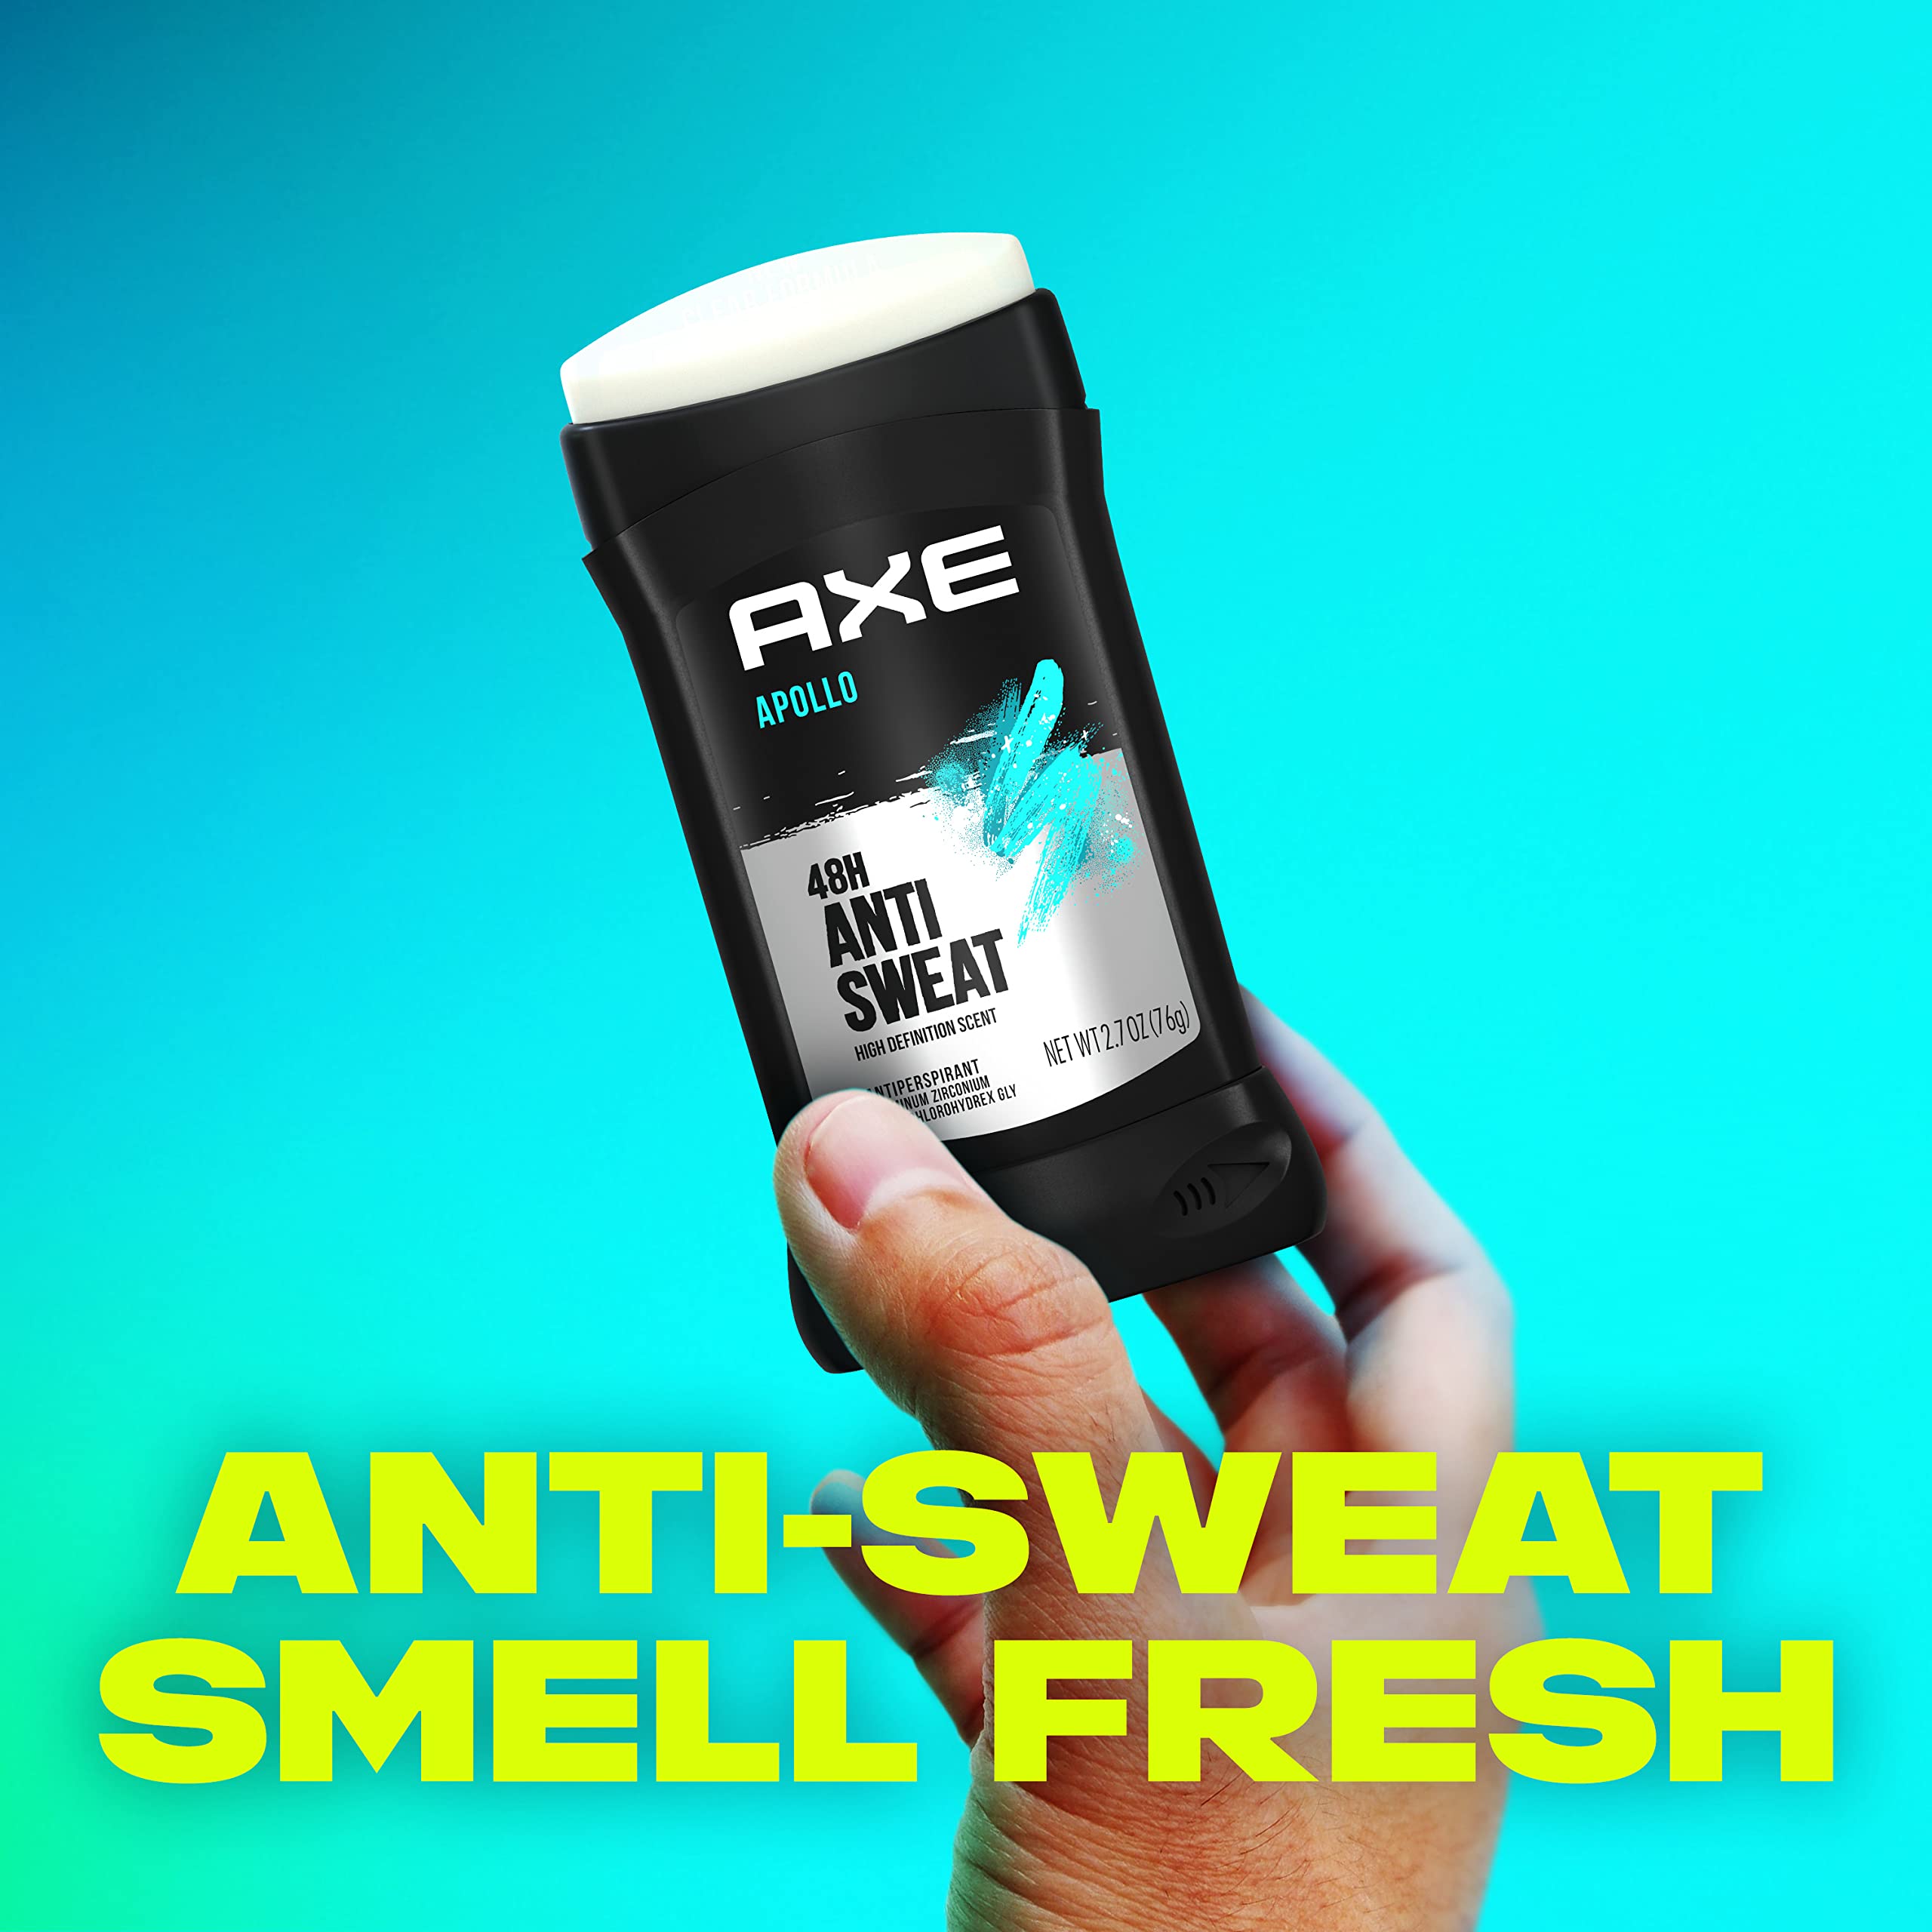 AXE Apollo Antiperspirant Deodorant Stick For Men Sage & Cedarwood 48 Hr Anti Sweat Mens Deodorant, 2.7 Ounce (Pack of 4)